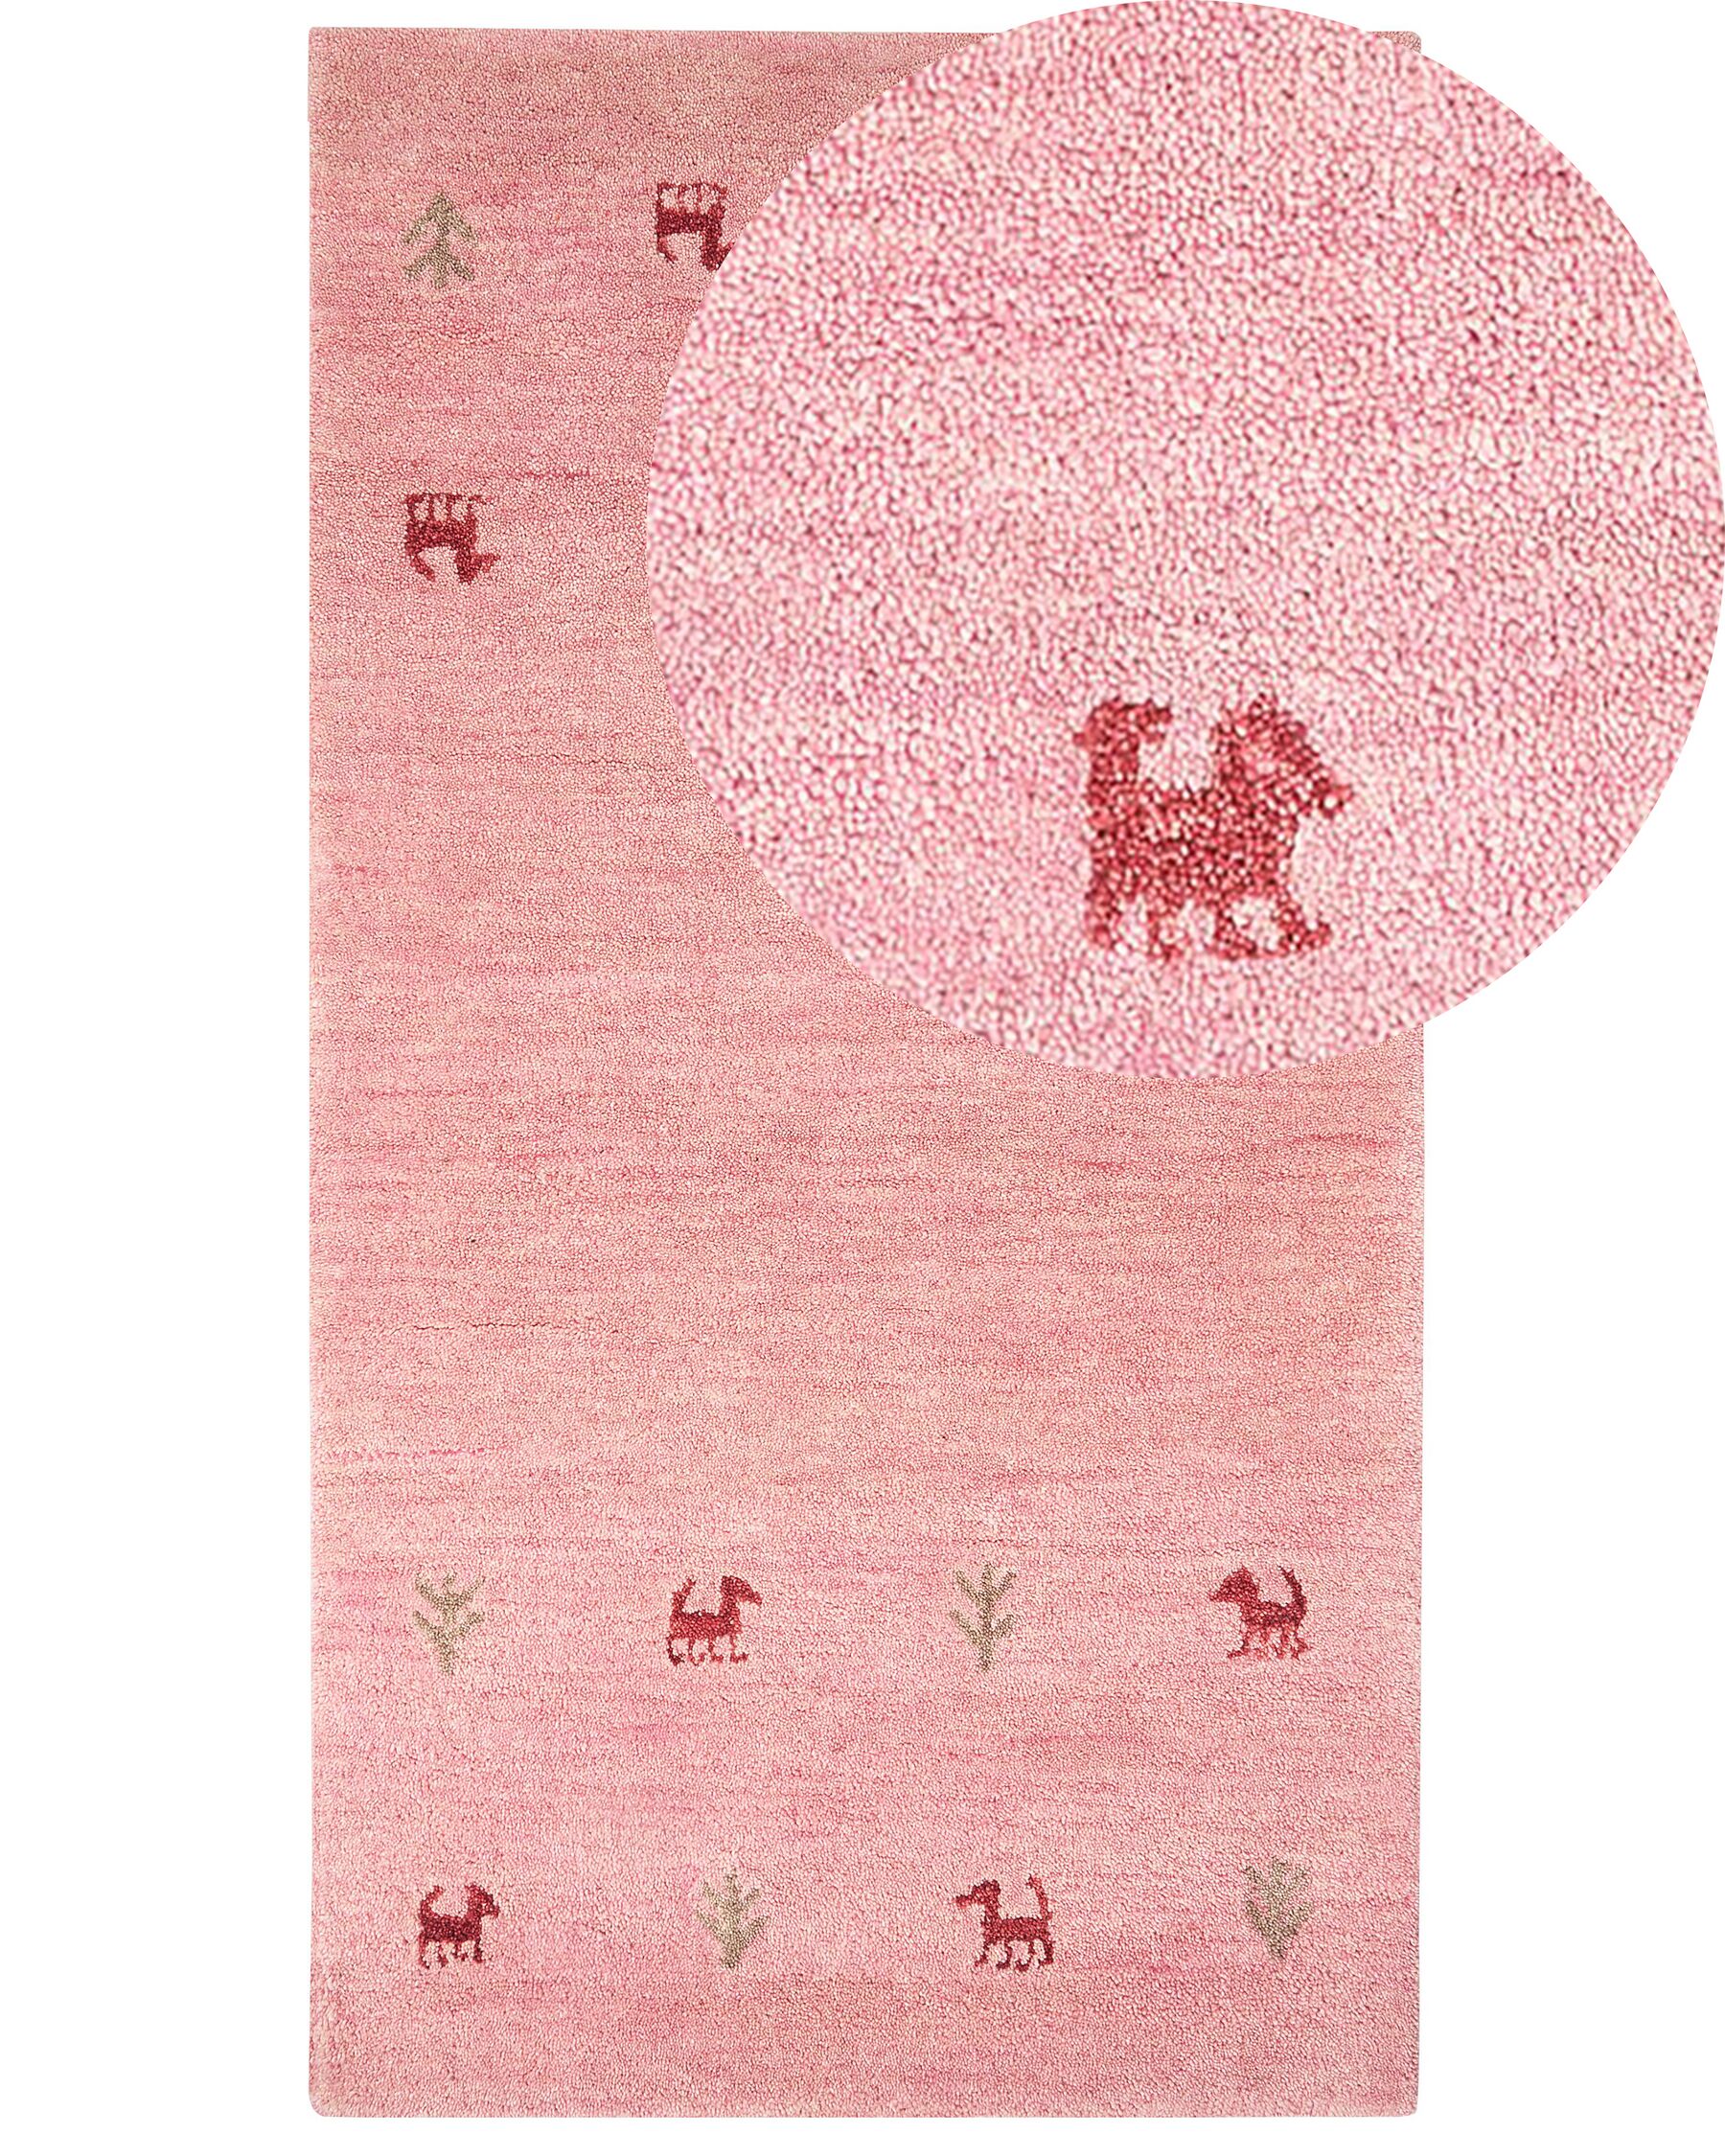 Gabbeh-matto villa vaaleanpunainen 80 x 150 cm YULAFI_855768